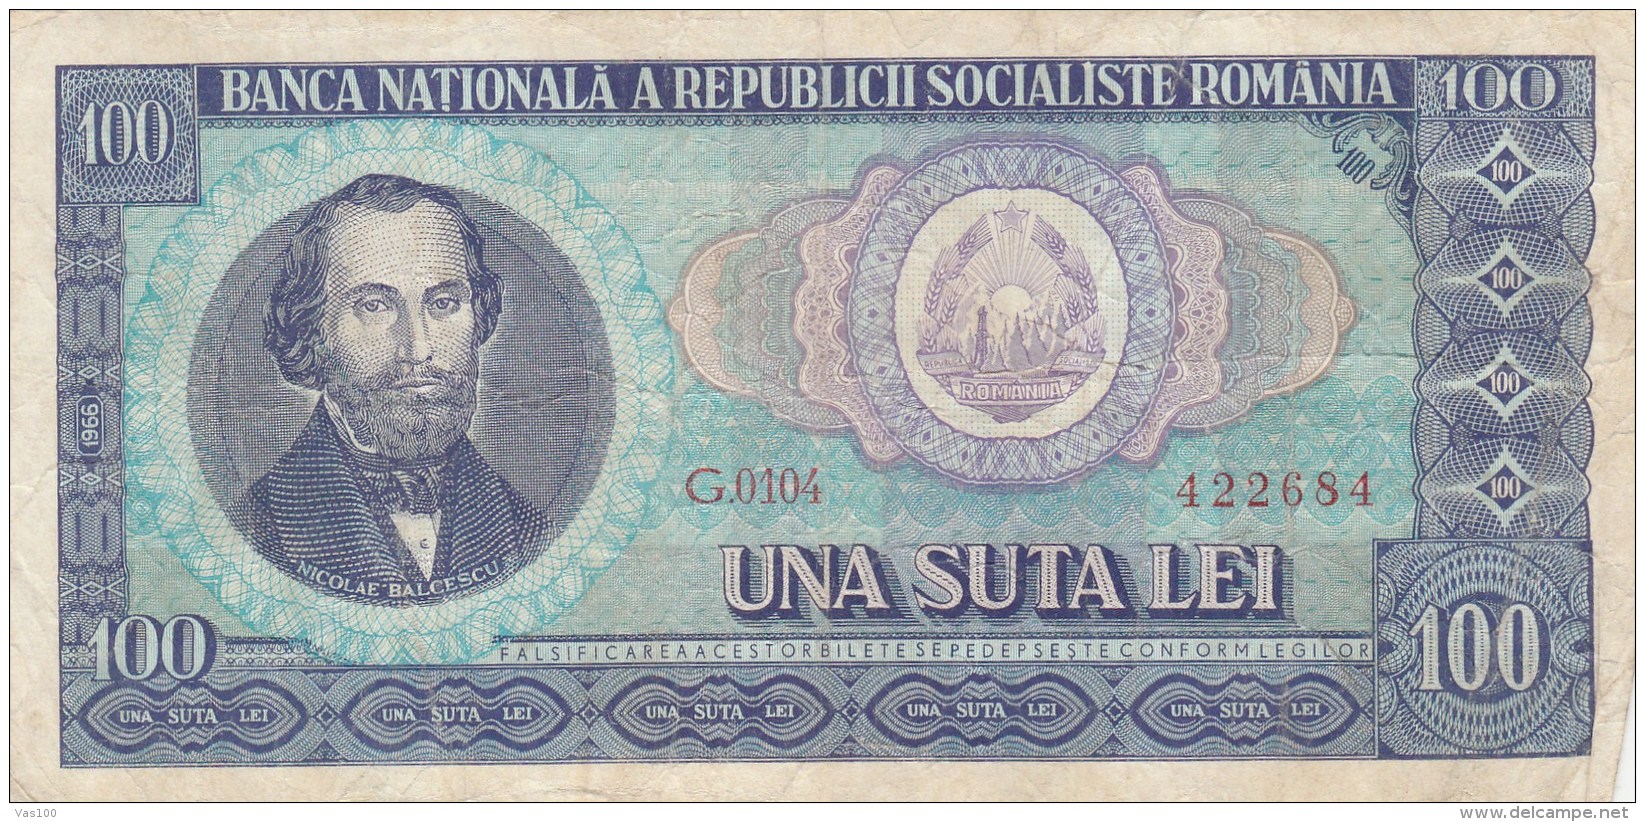 100 LEI, NICOLAE BALCESCU, 1966, PAPER BANKNOTE,ROMANIA. - Roemenië